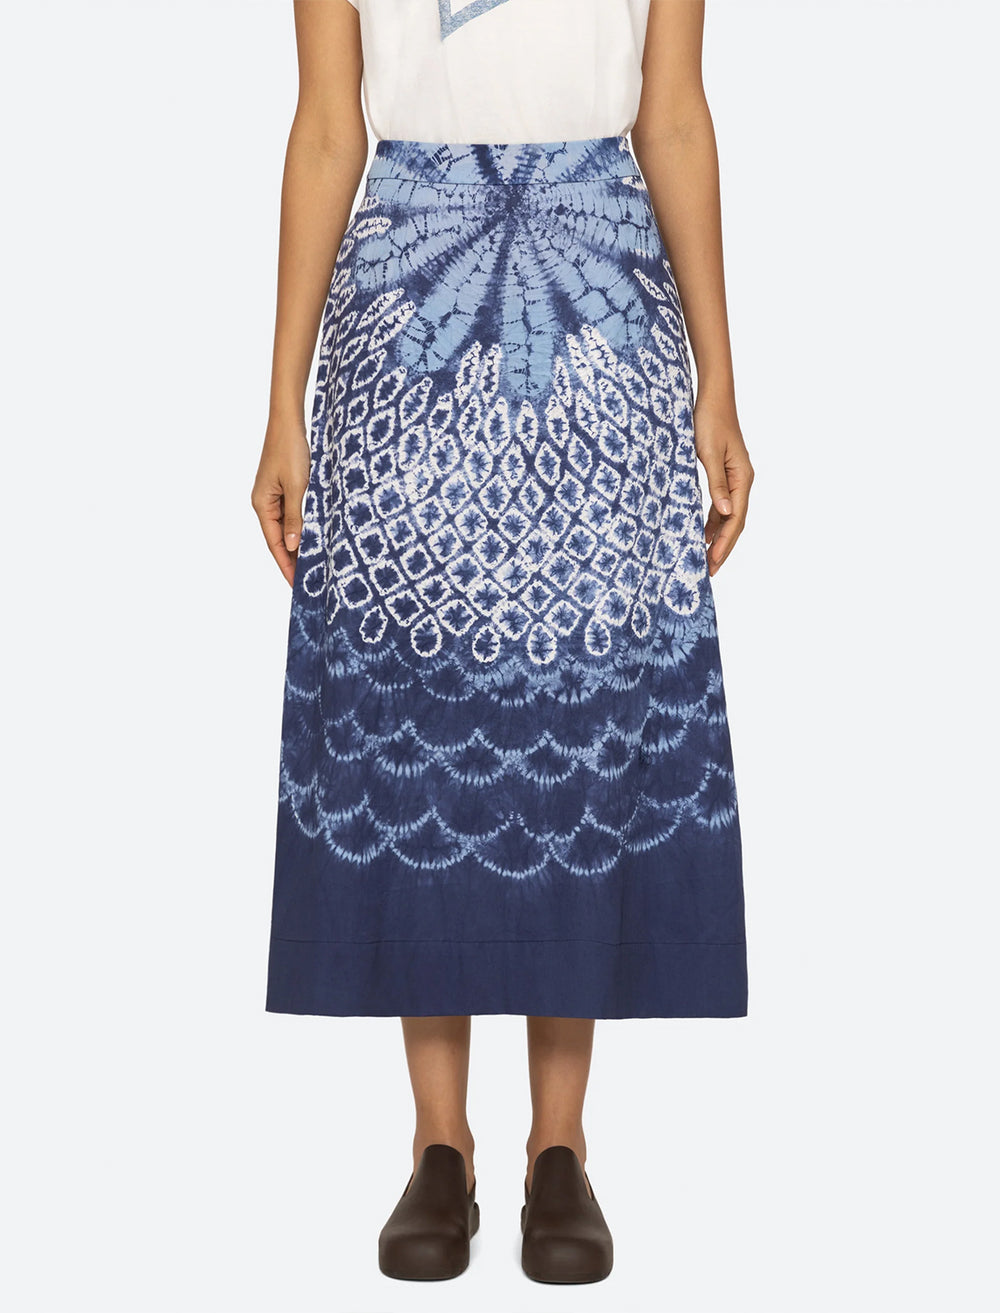 Model wearing Sea NY's blythe dye print skirt